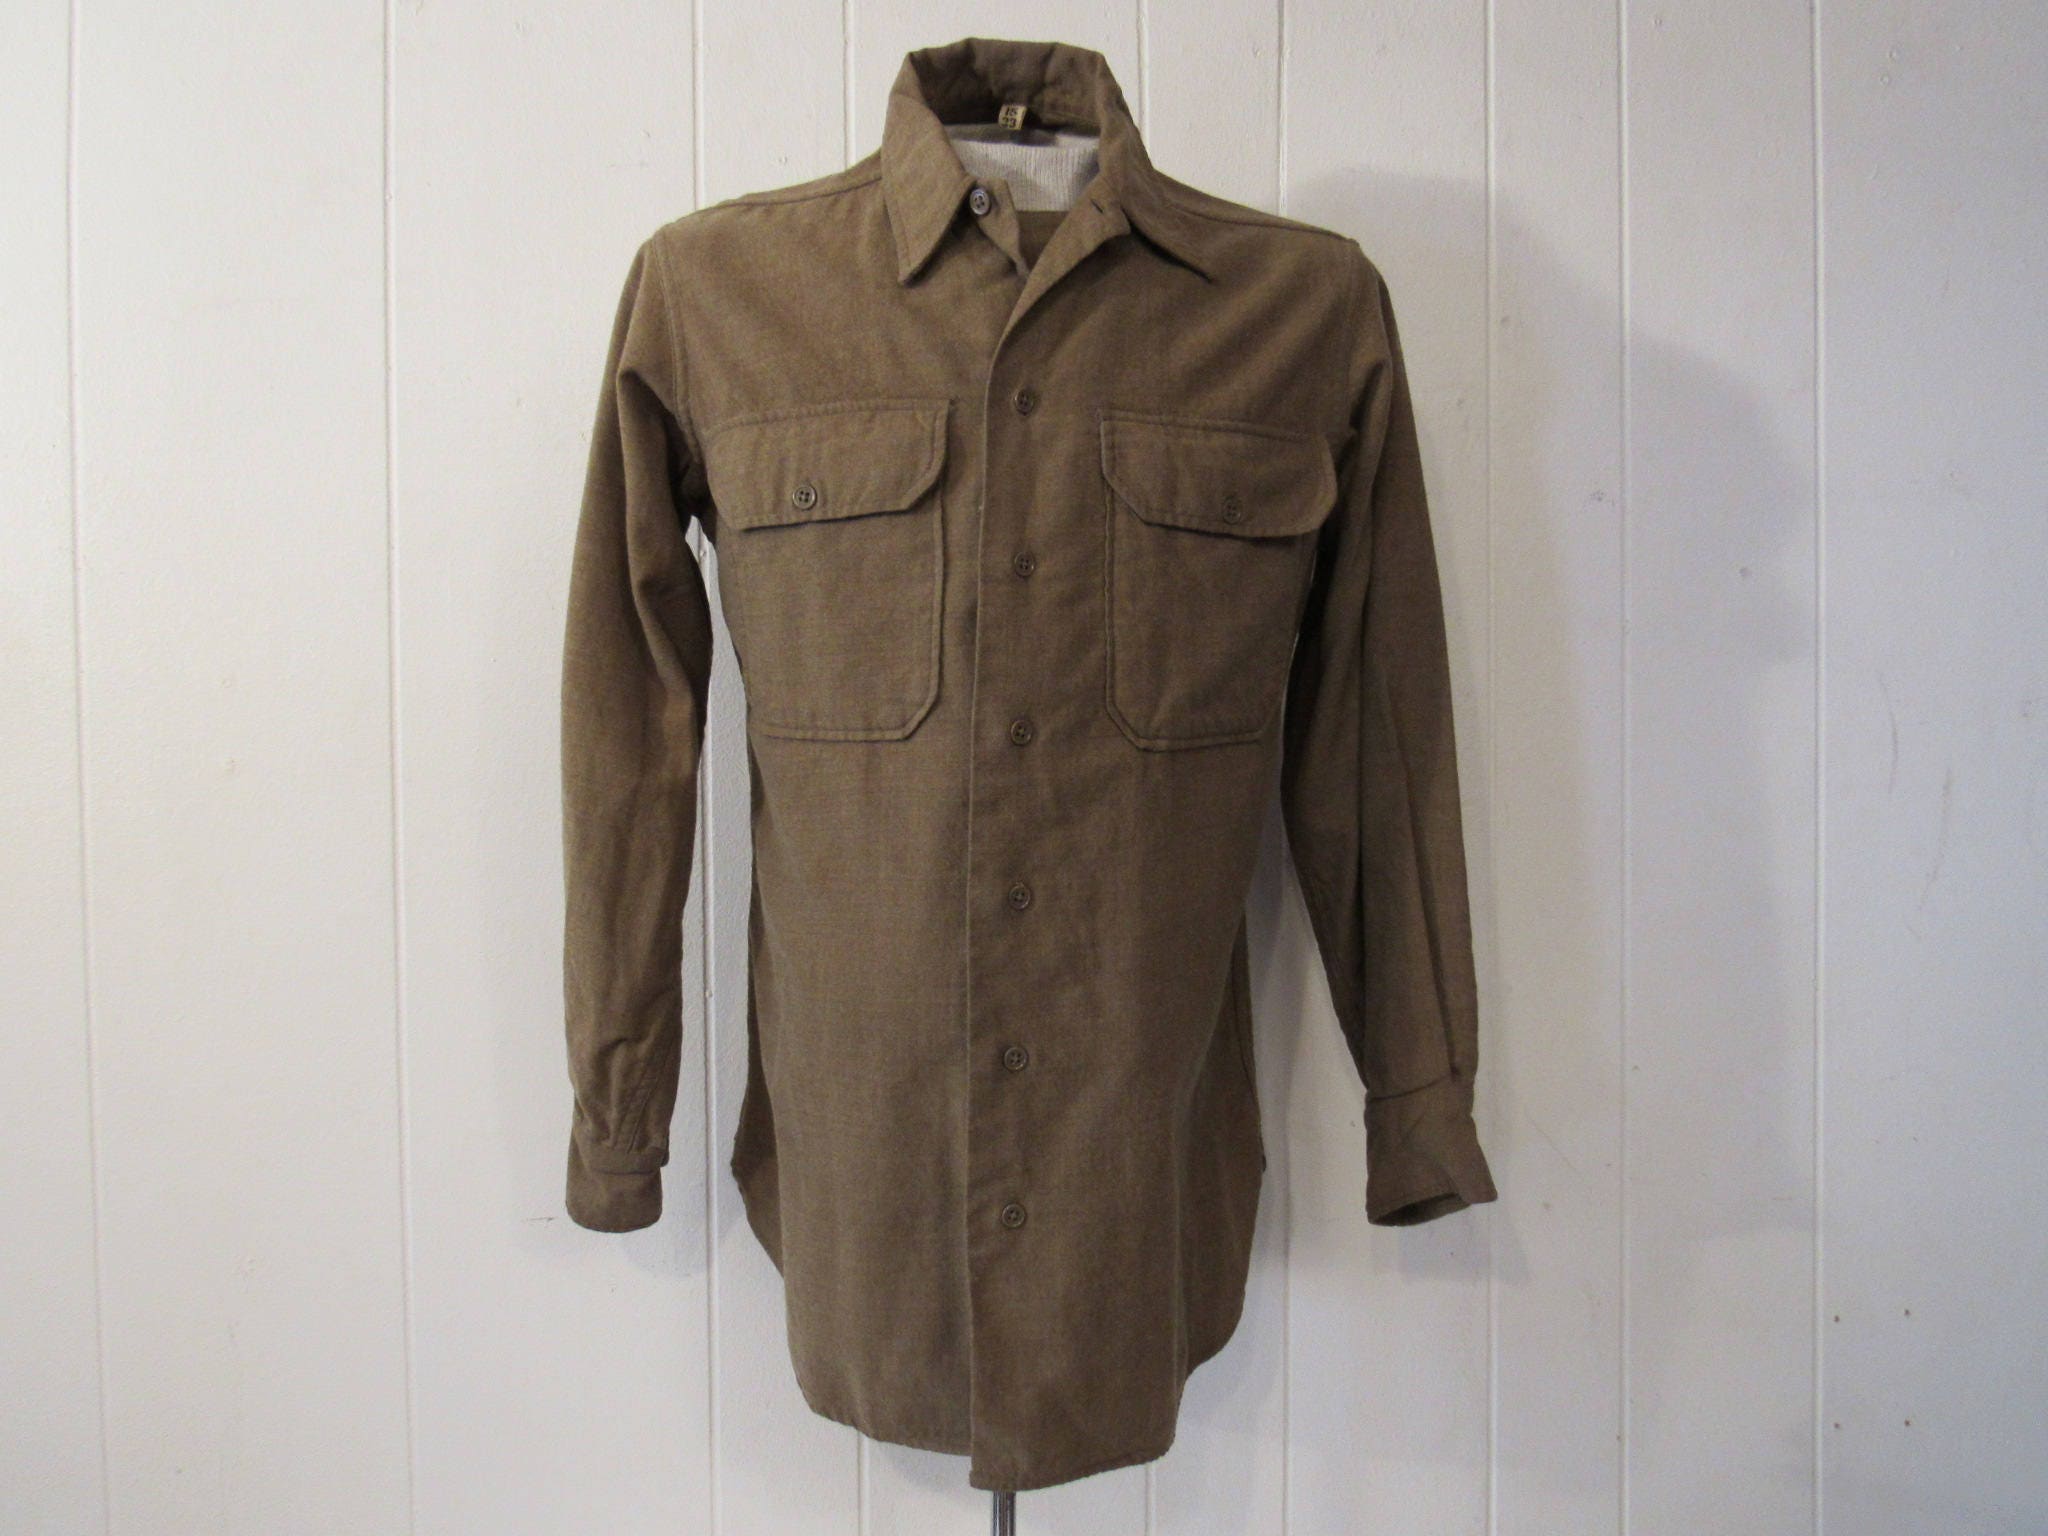 Vintage Shirt WWII Shirt WWII Uniform Military Shirt 1940s | Etsy